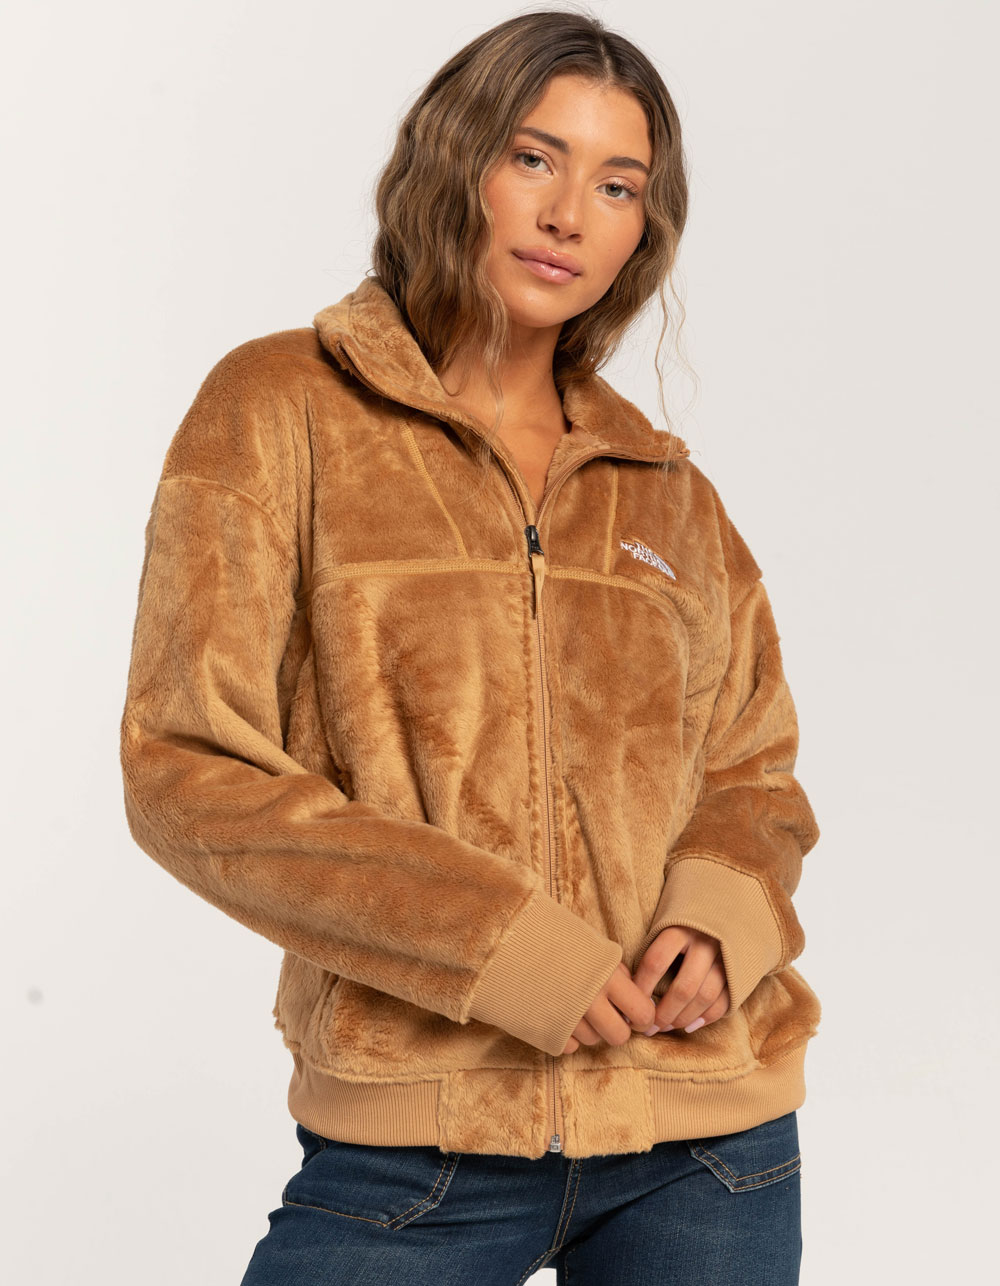 The North Face Women's OSITO LUX Fleece Full Zipper Jacket D1140